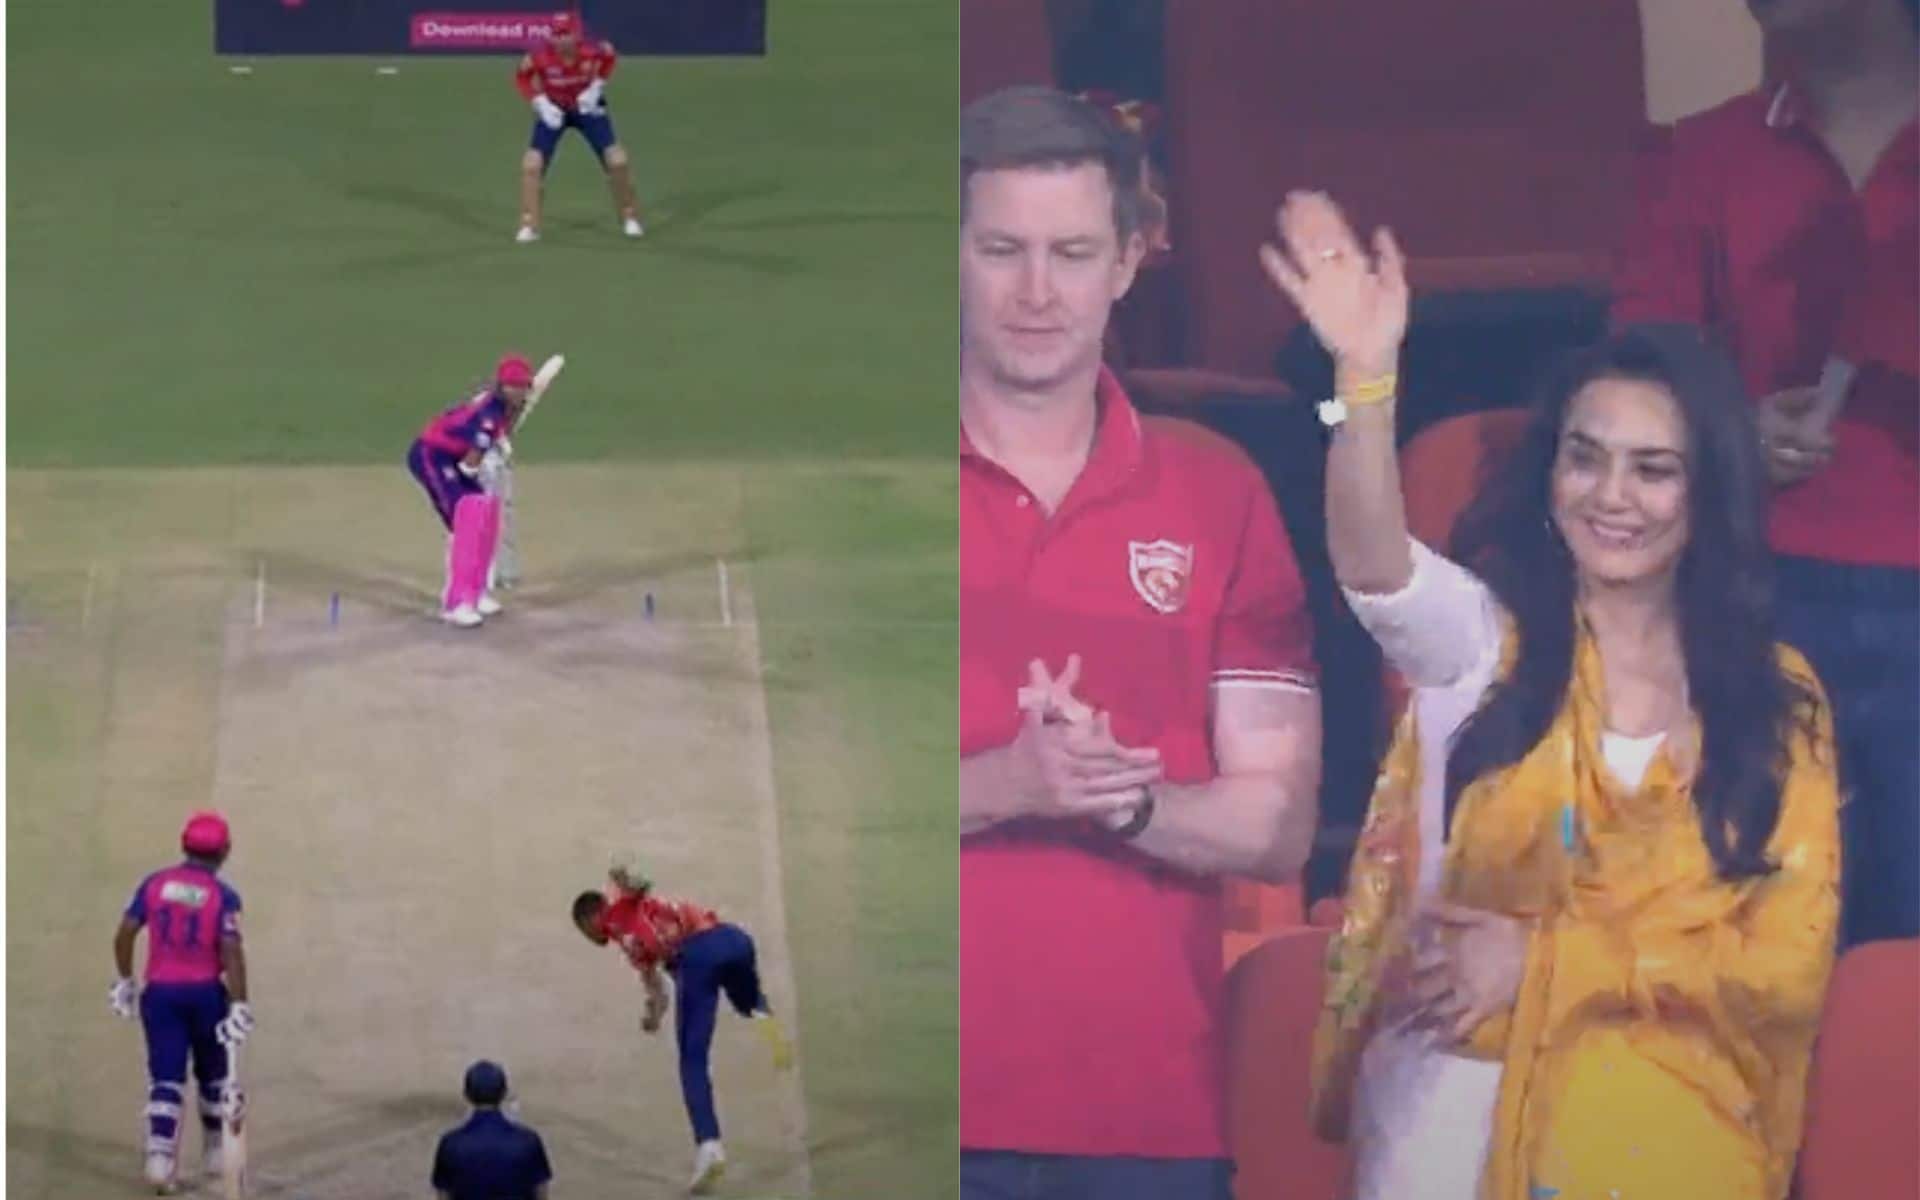 Preity Zinta waves her hand after Jaiswal's wicket (X.com)